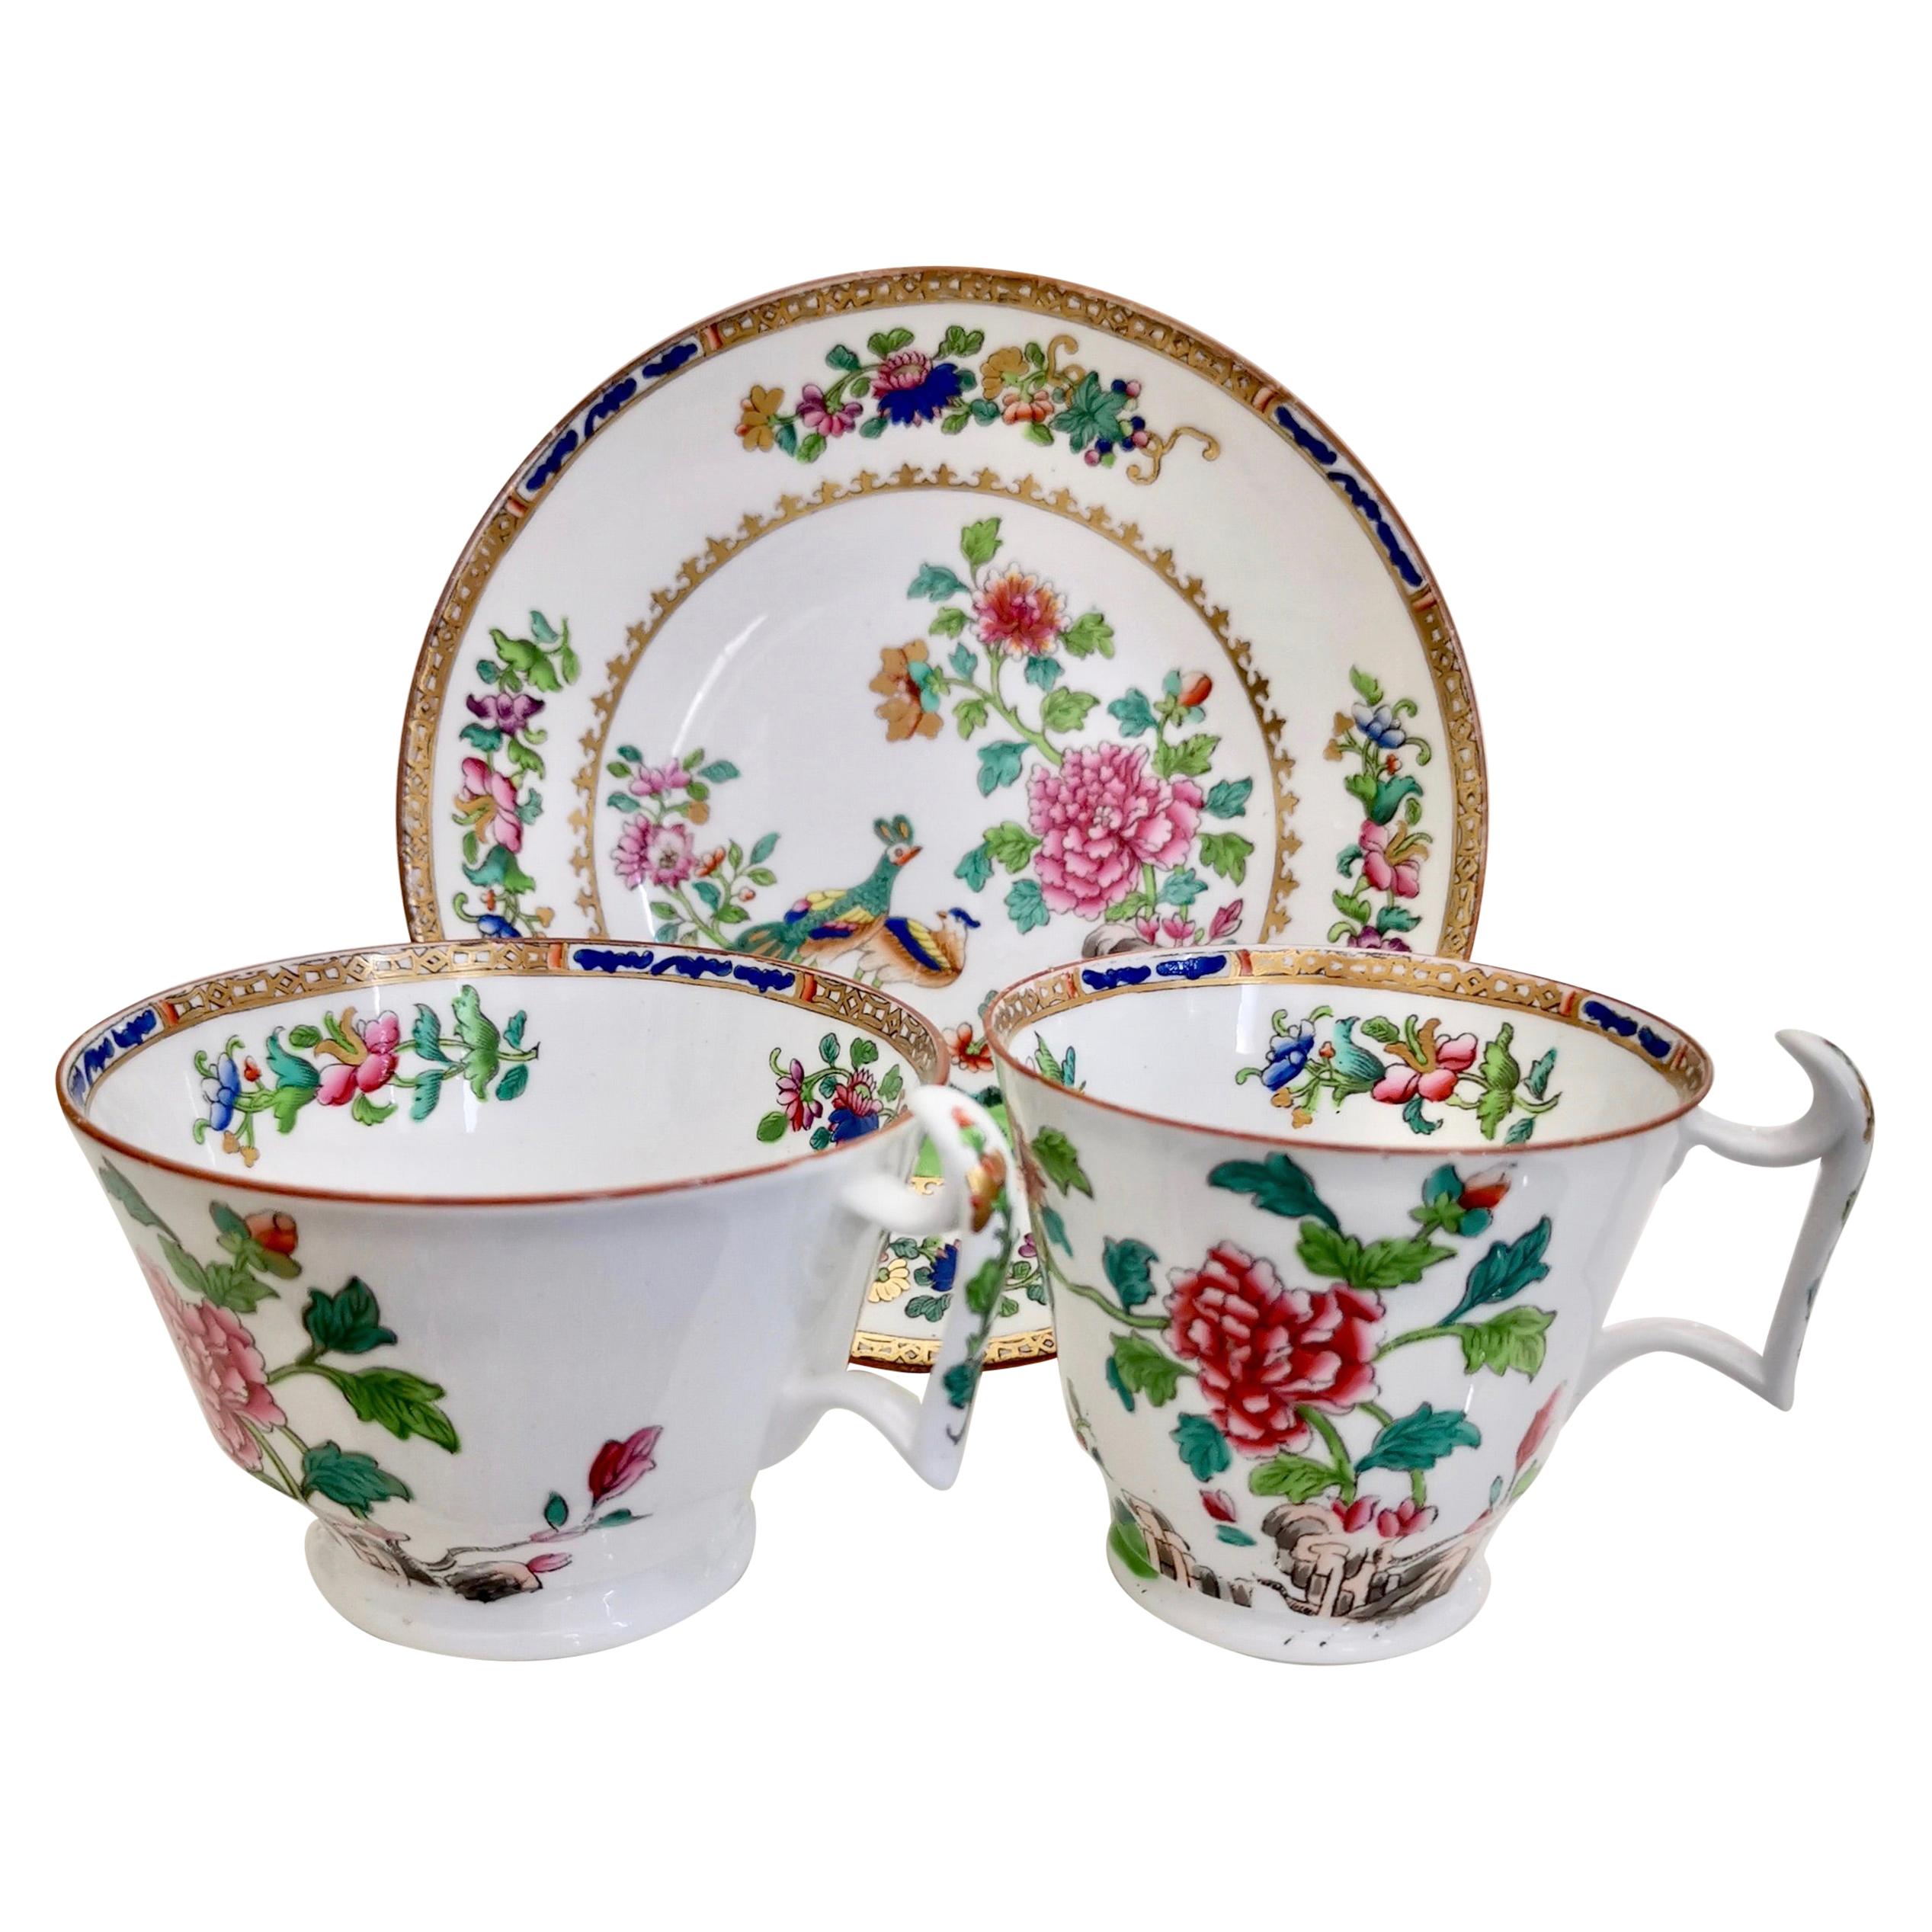 Spode Porcelain Teacup Trio, Peacock Pattern 2083, Regency, 1814-1825